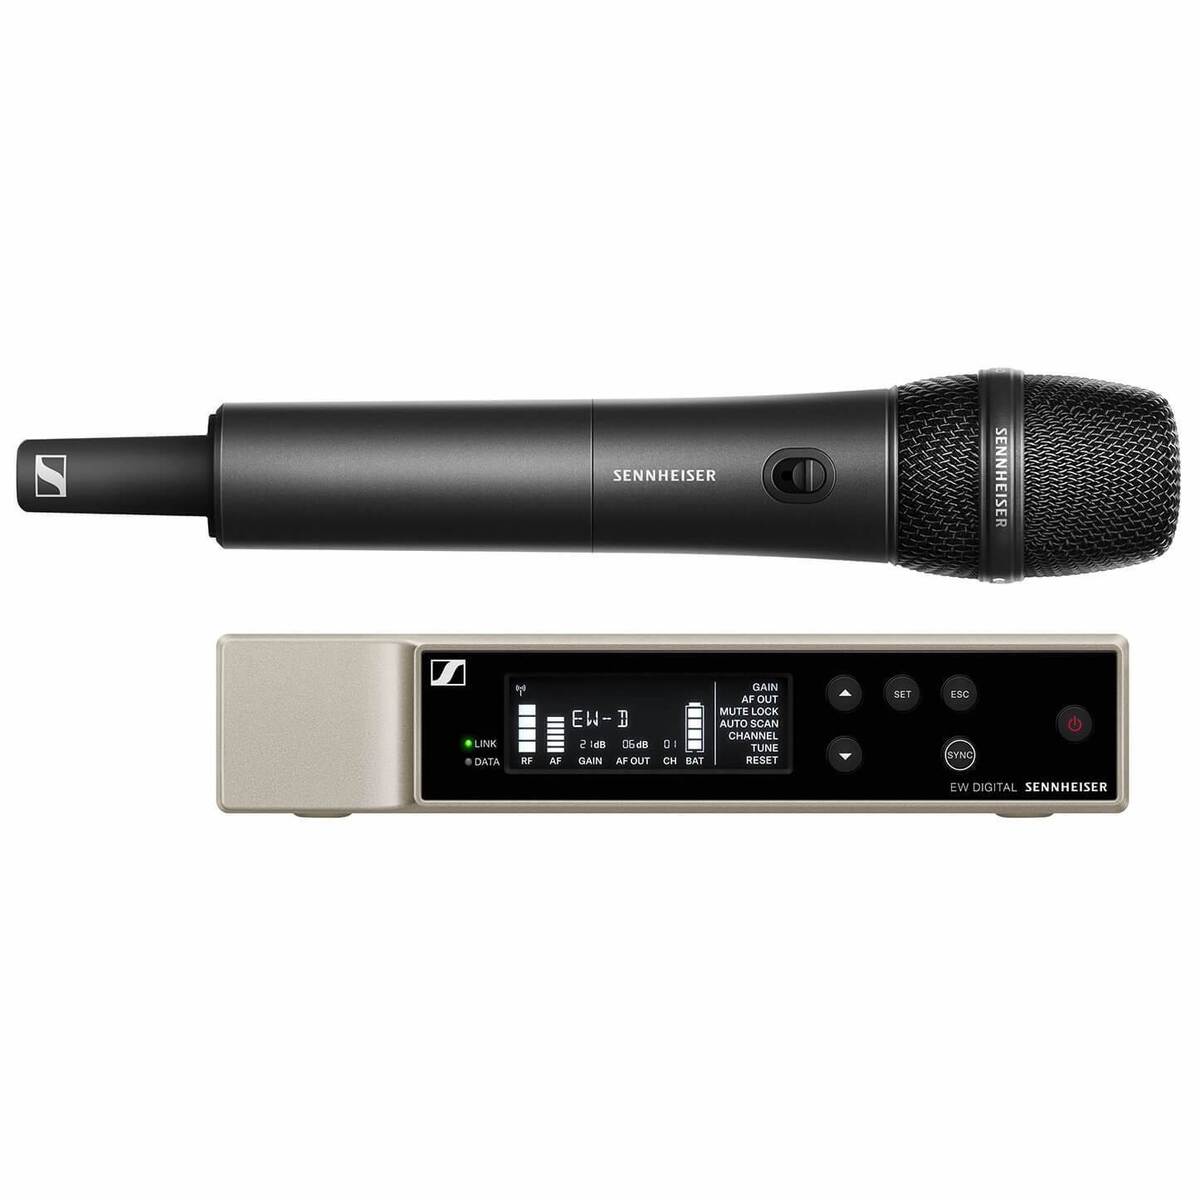 Digital Wireless Microphone System